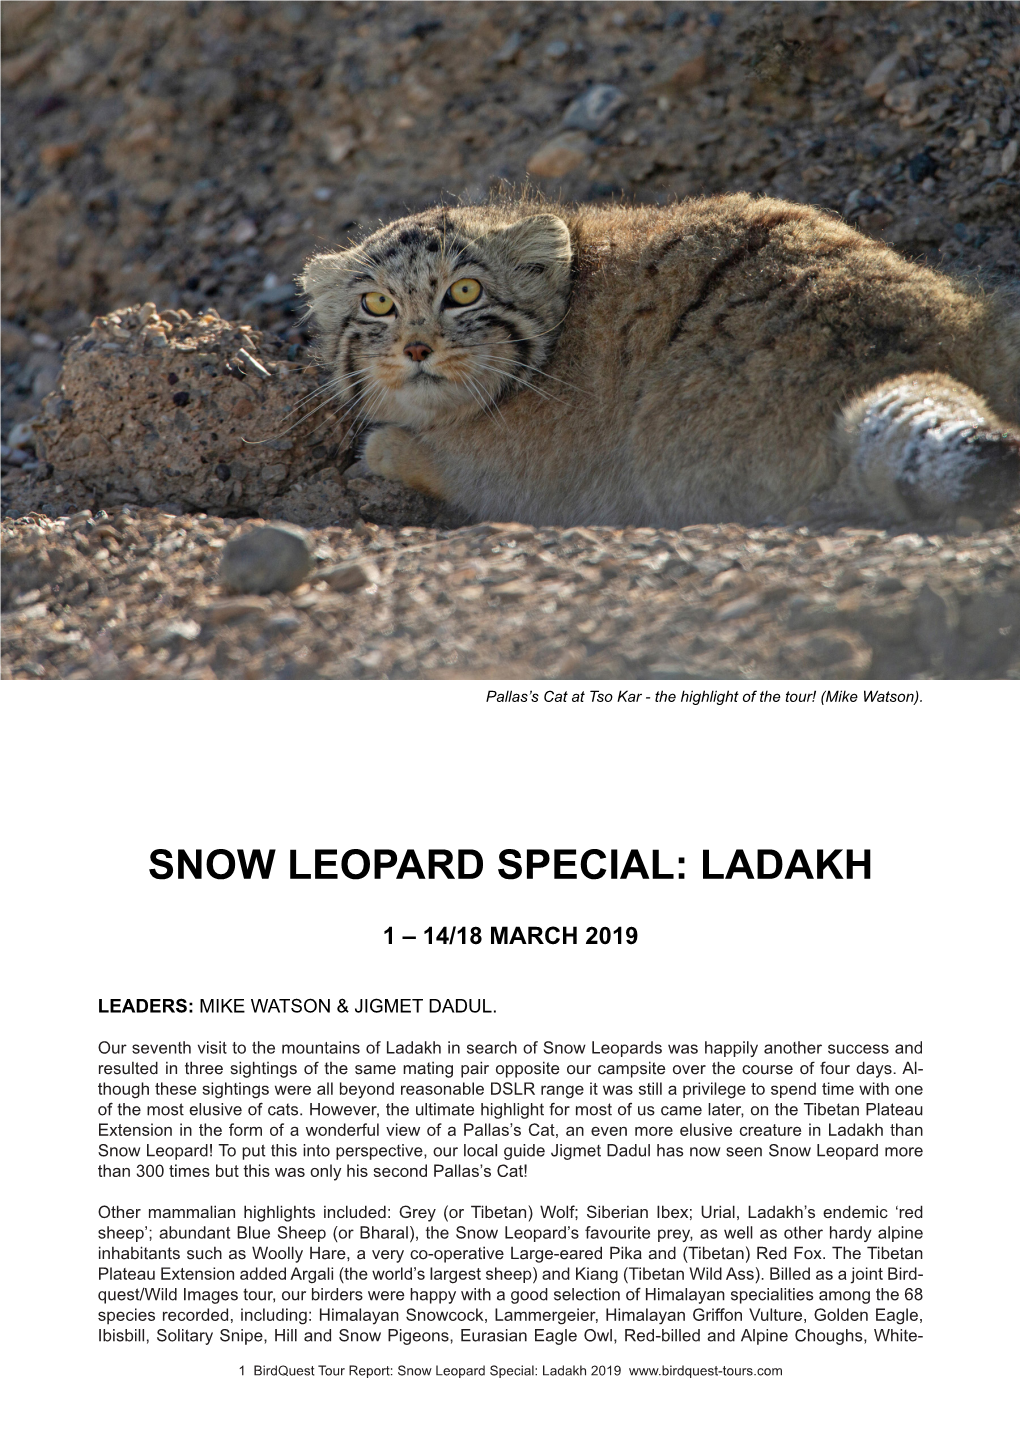 Snow Leopard Special: Ladakh